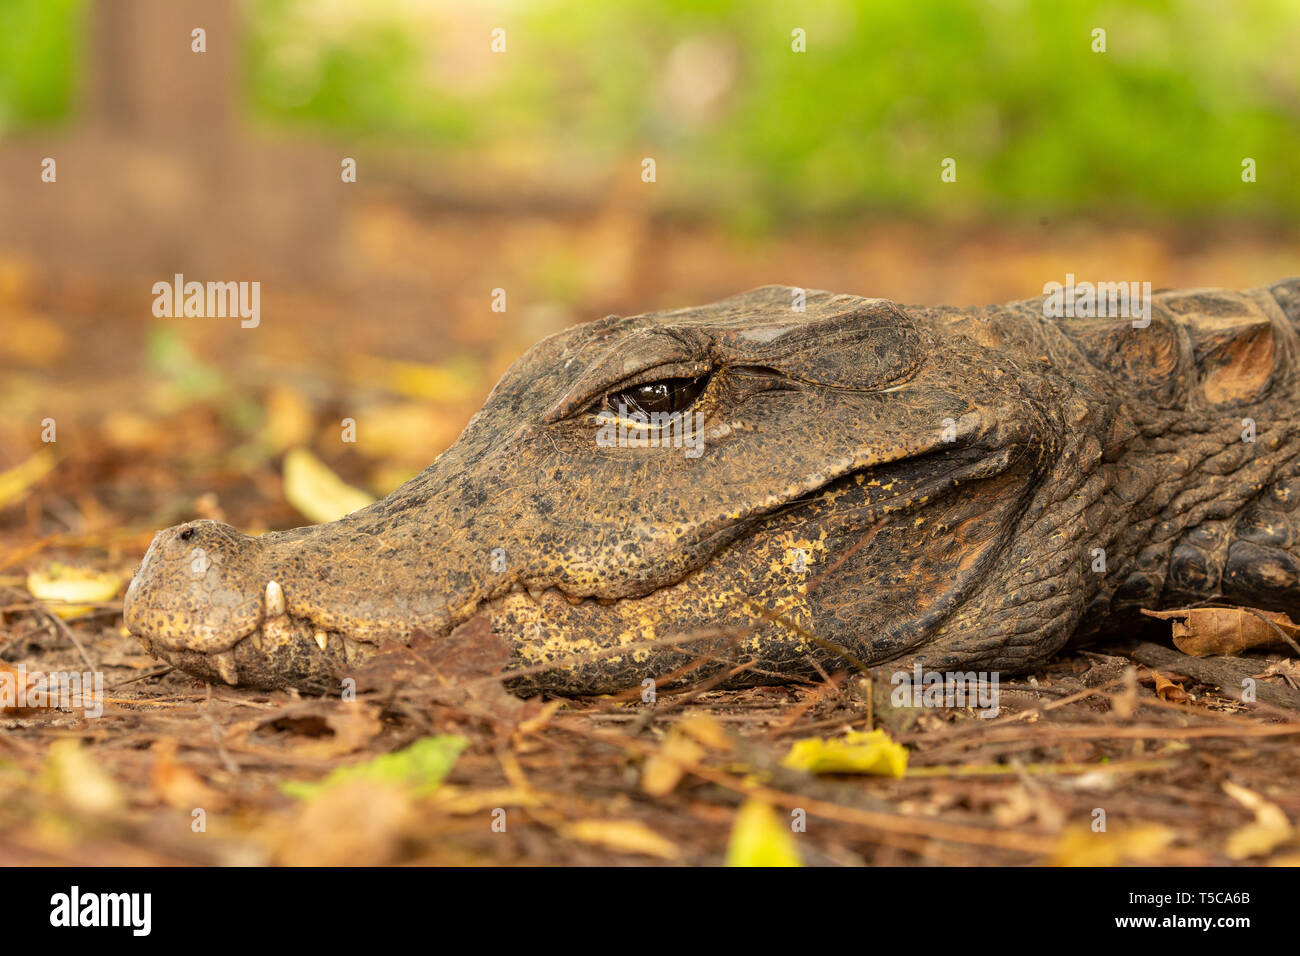 west African dwarf crocodile close up portrait at dawn Stock Photo